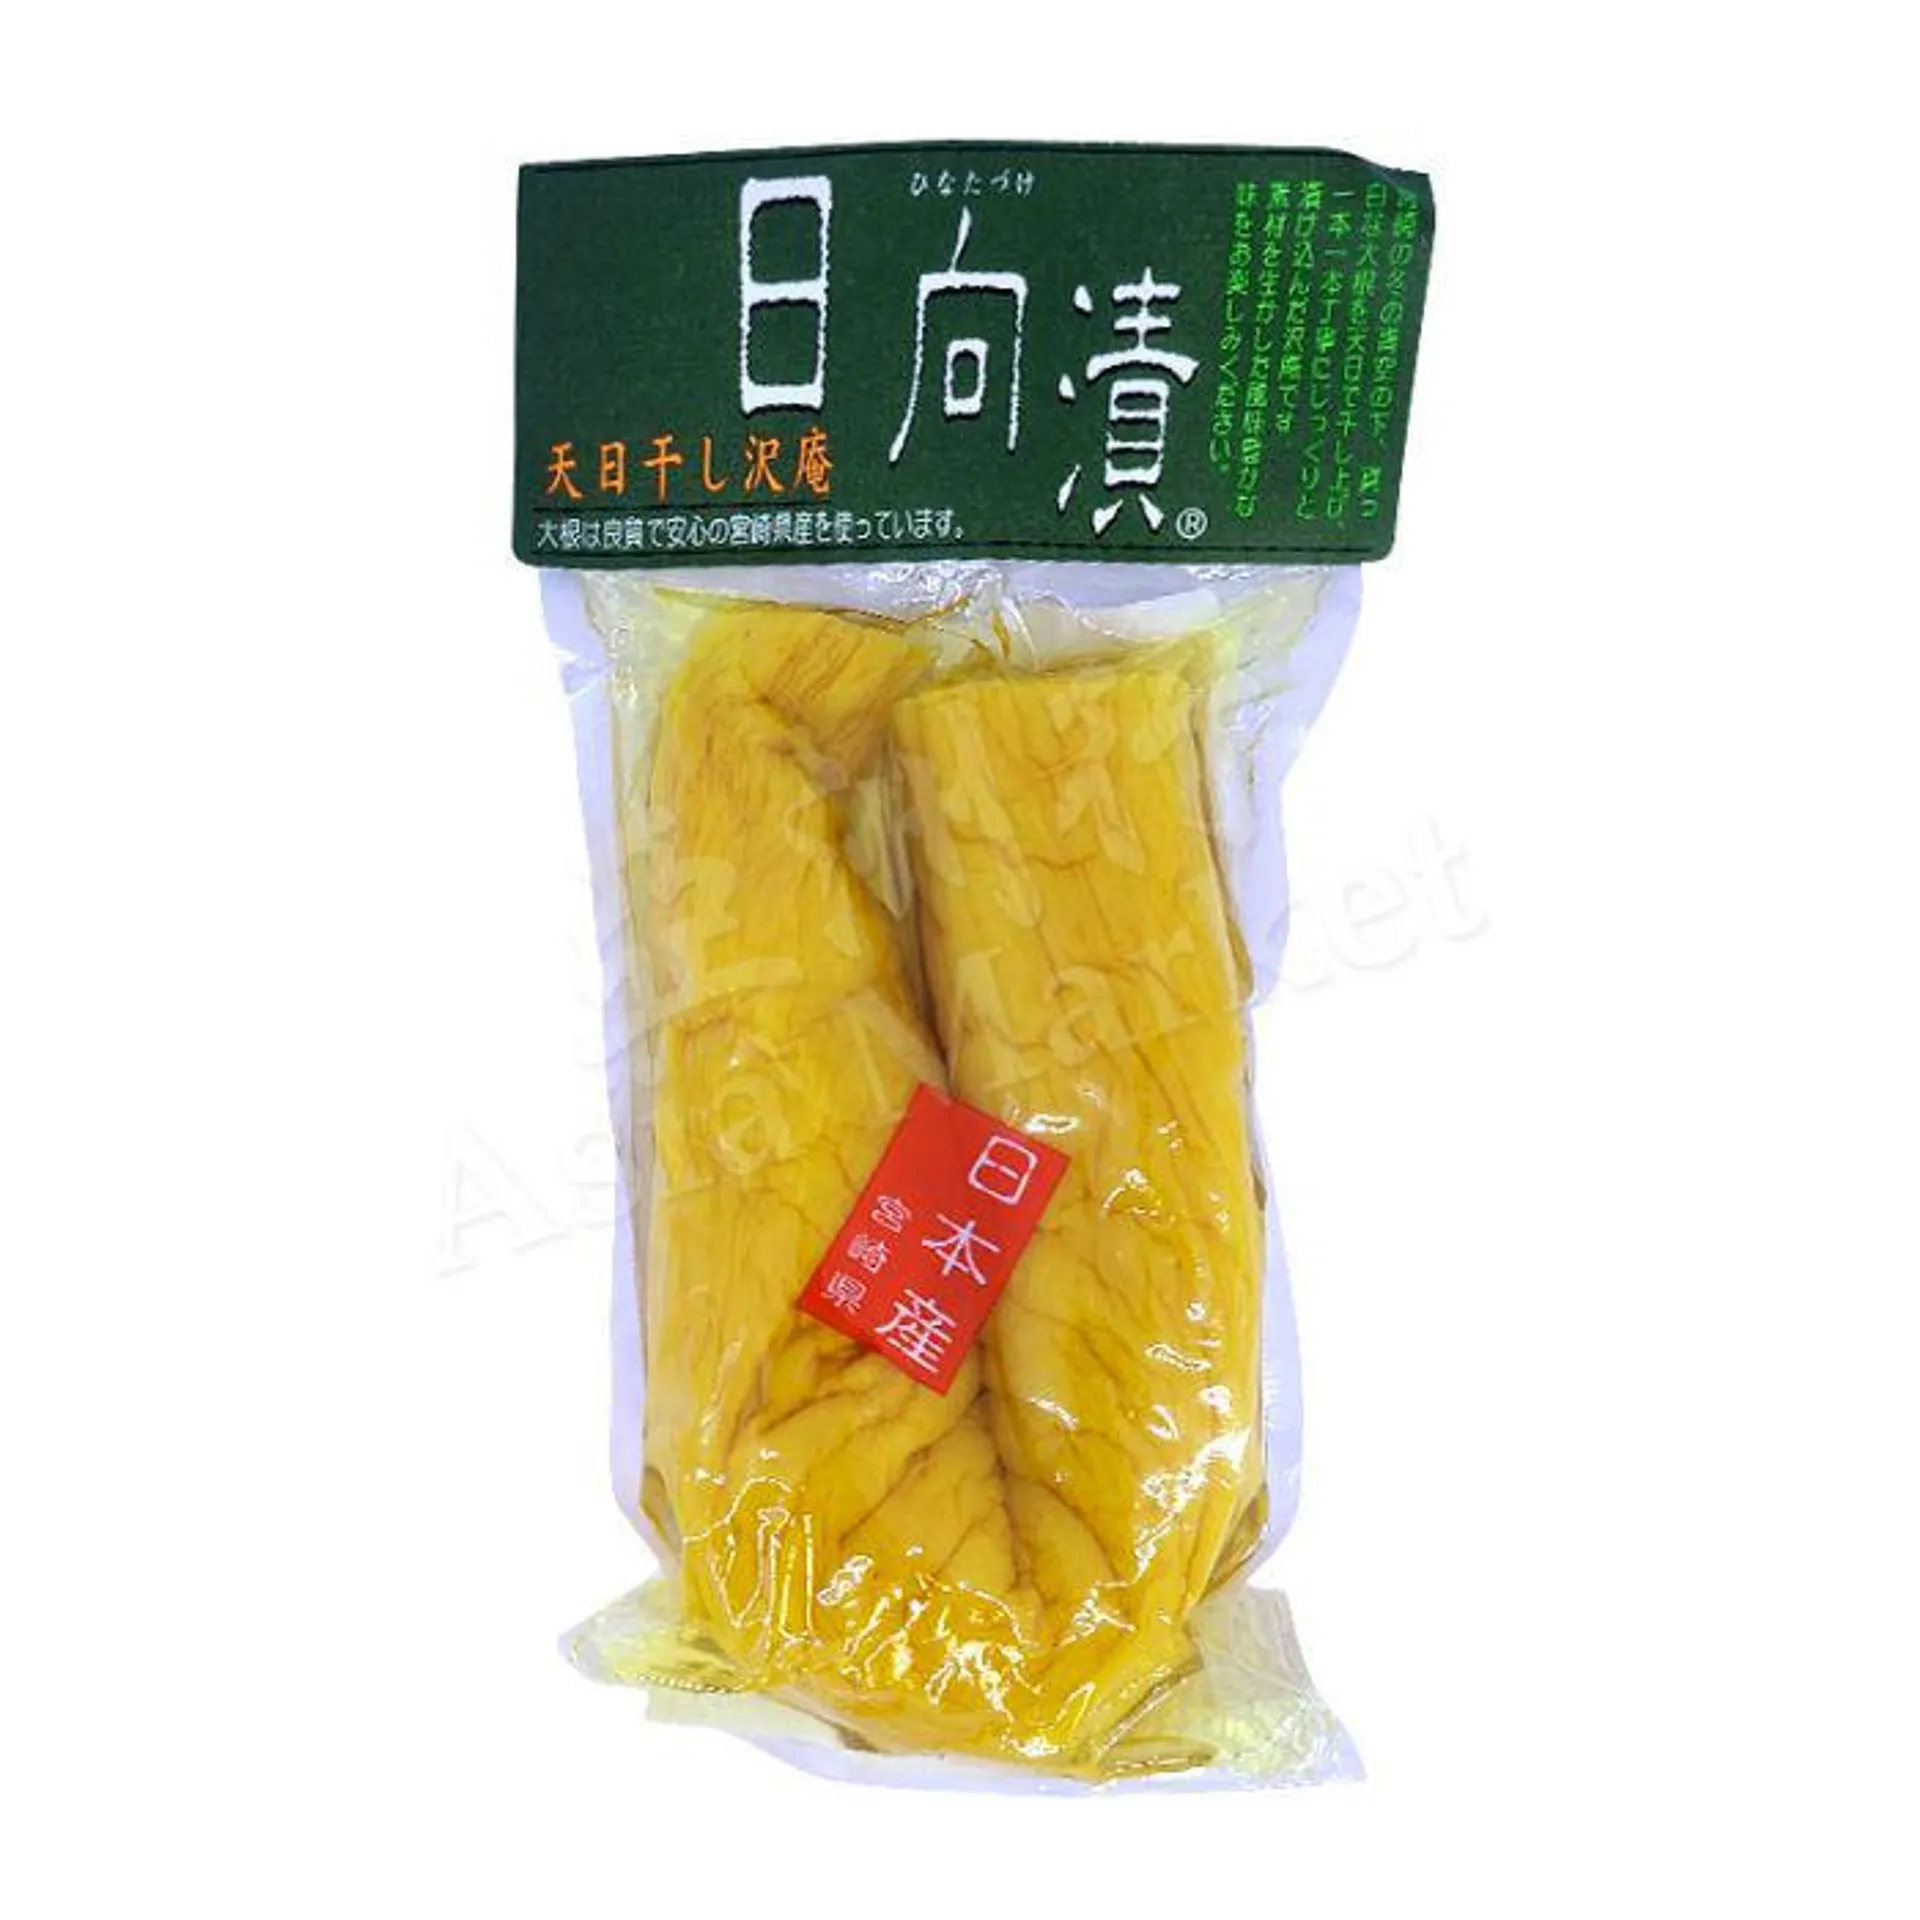 MICHIMOTO - Takuan Hinatazuke, Sun Dried Pickled Radish 220g